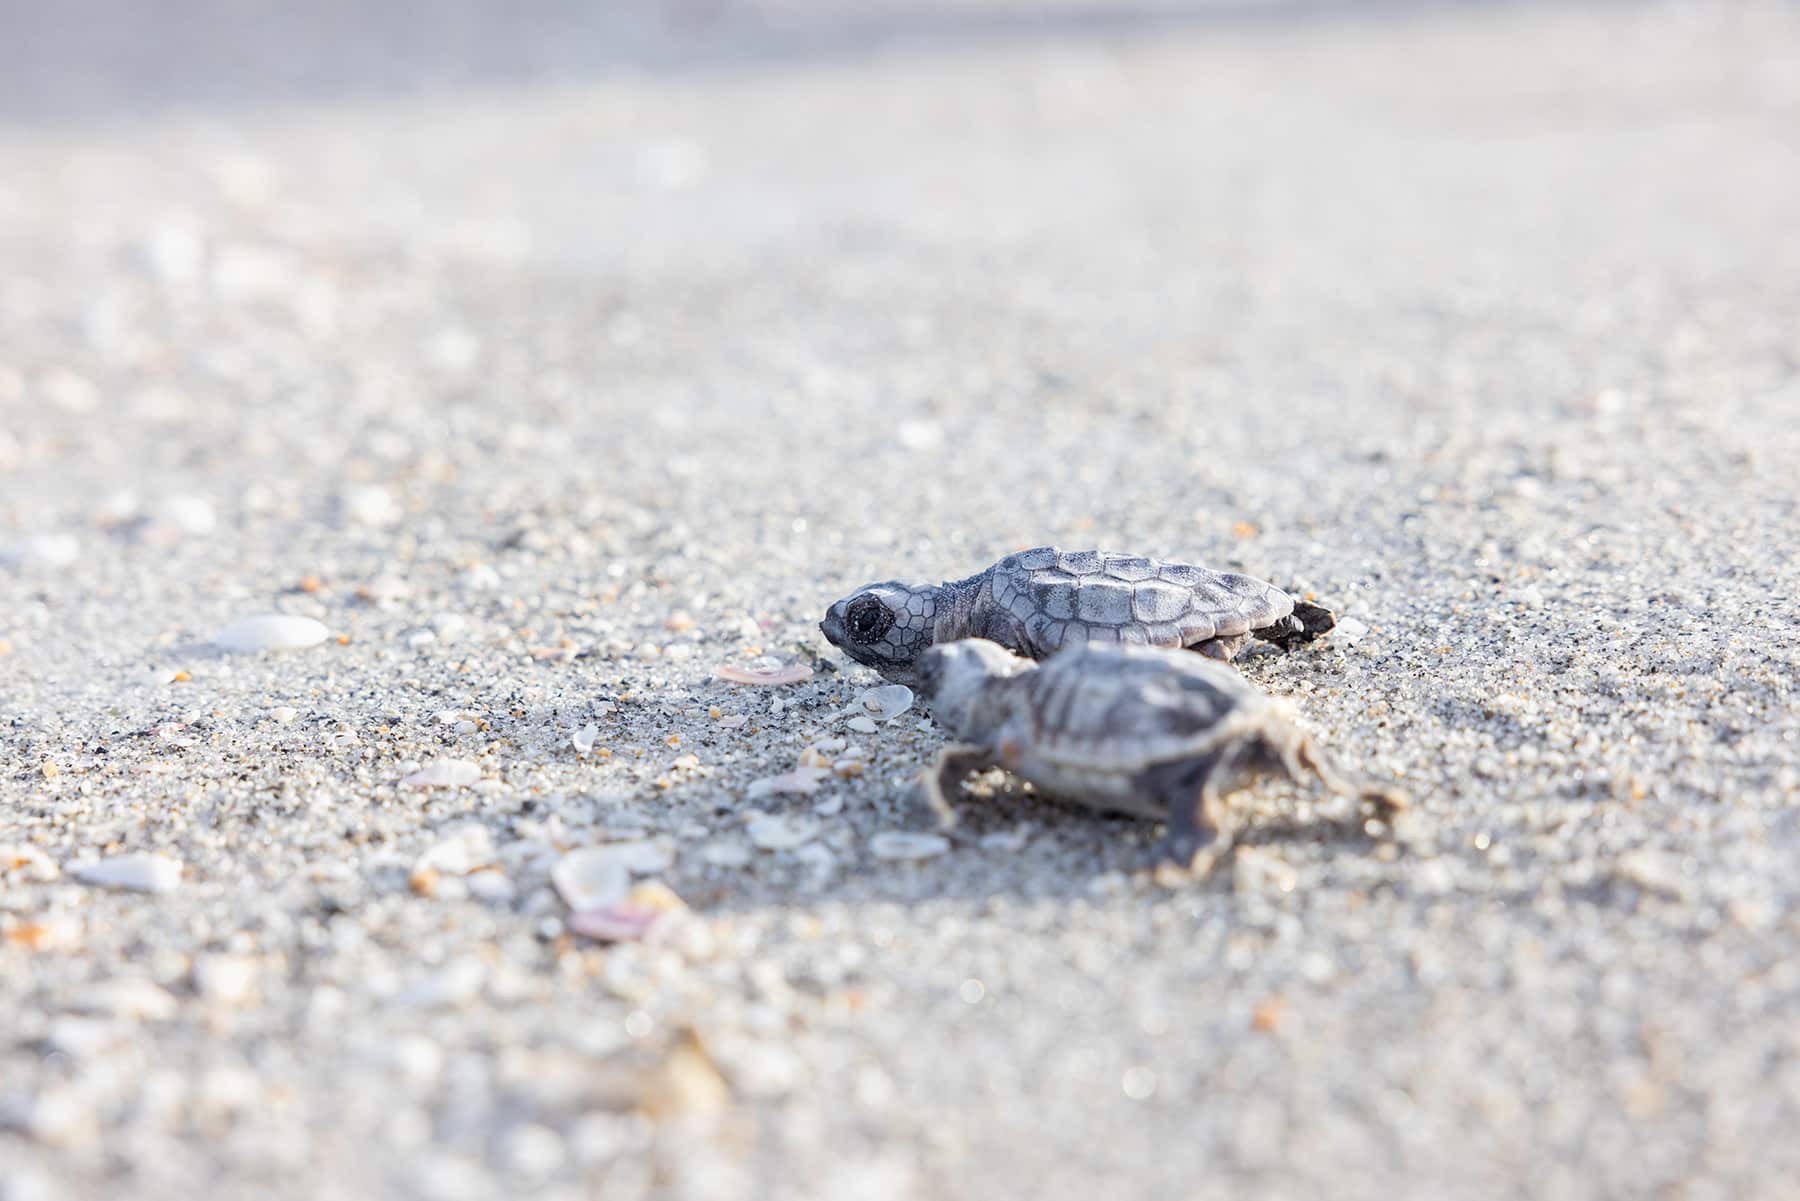 sea turtle hatchlings